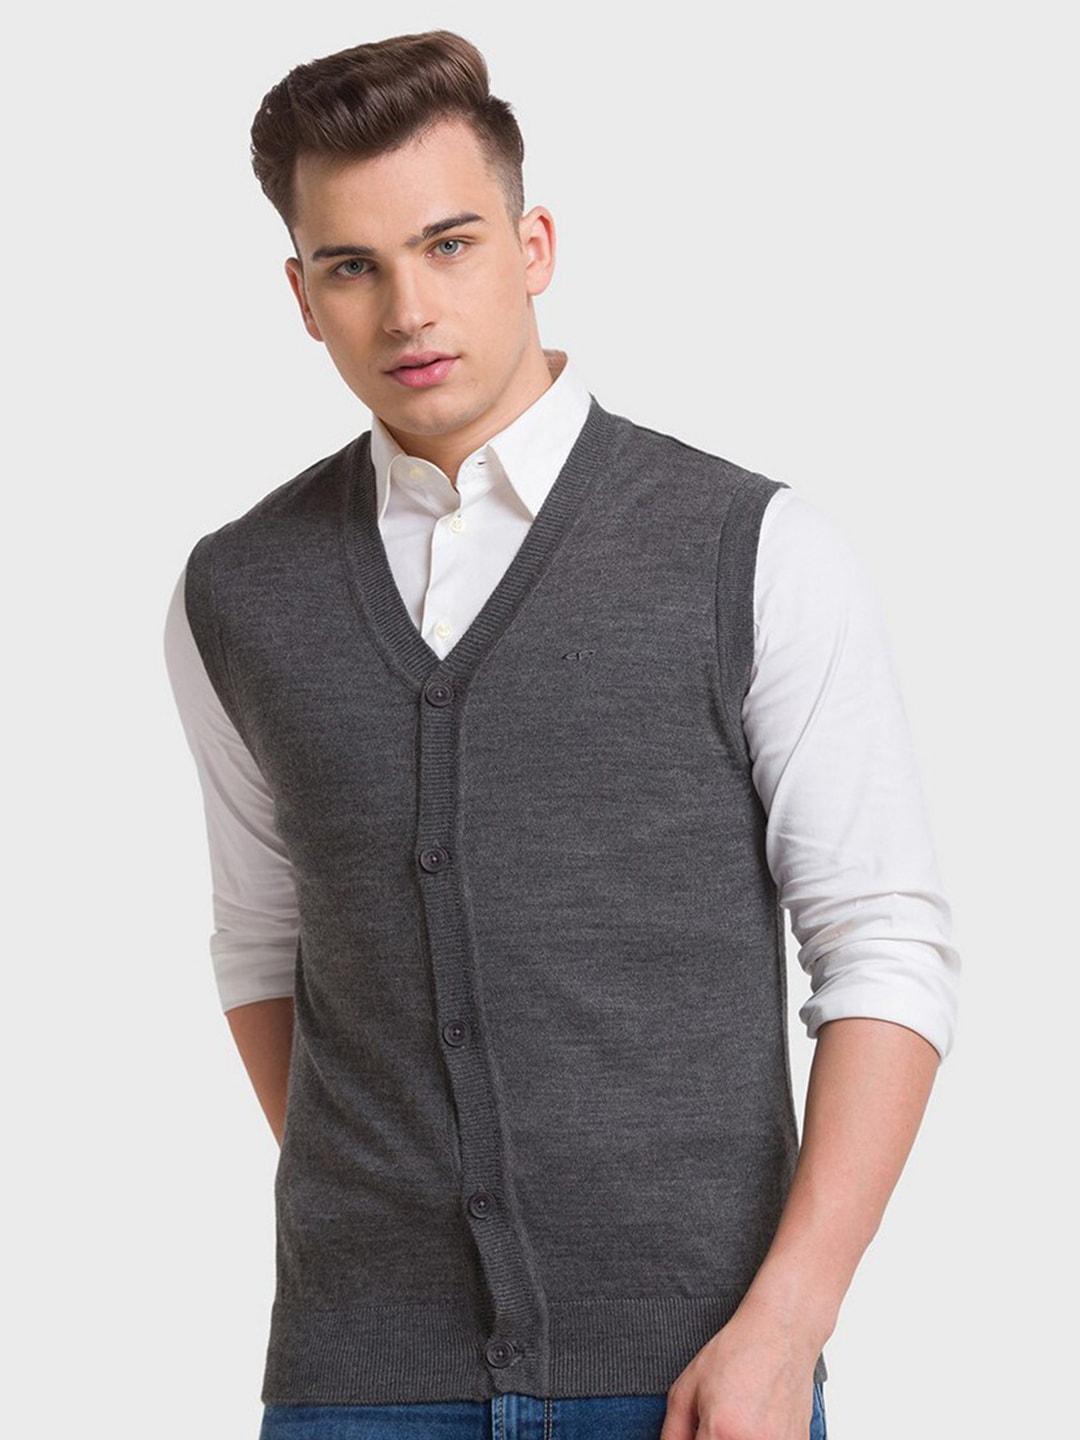 colorplus-men-grey-sweater-vest